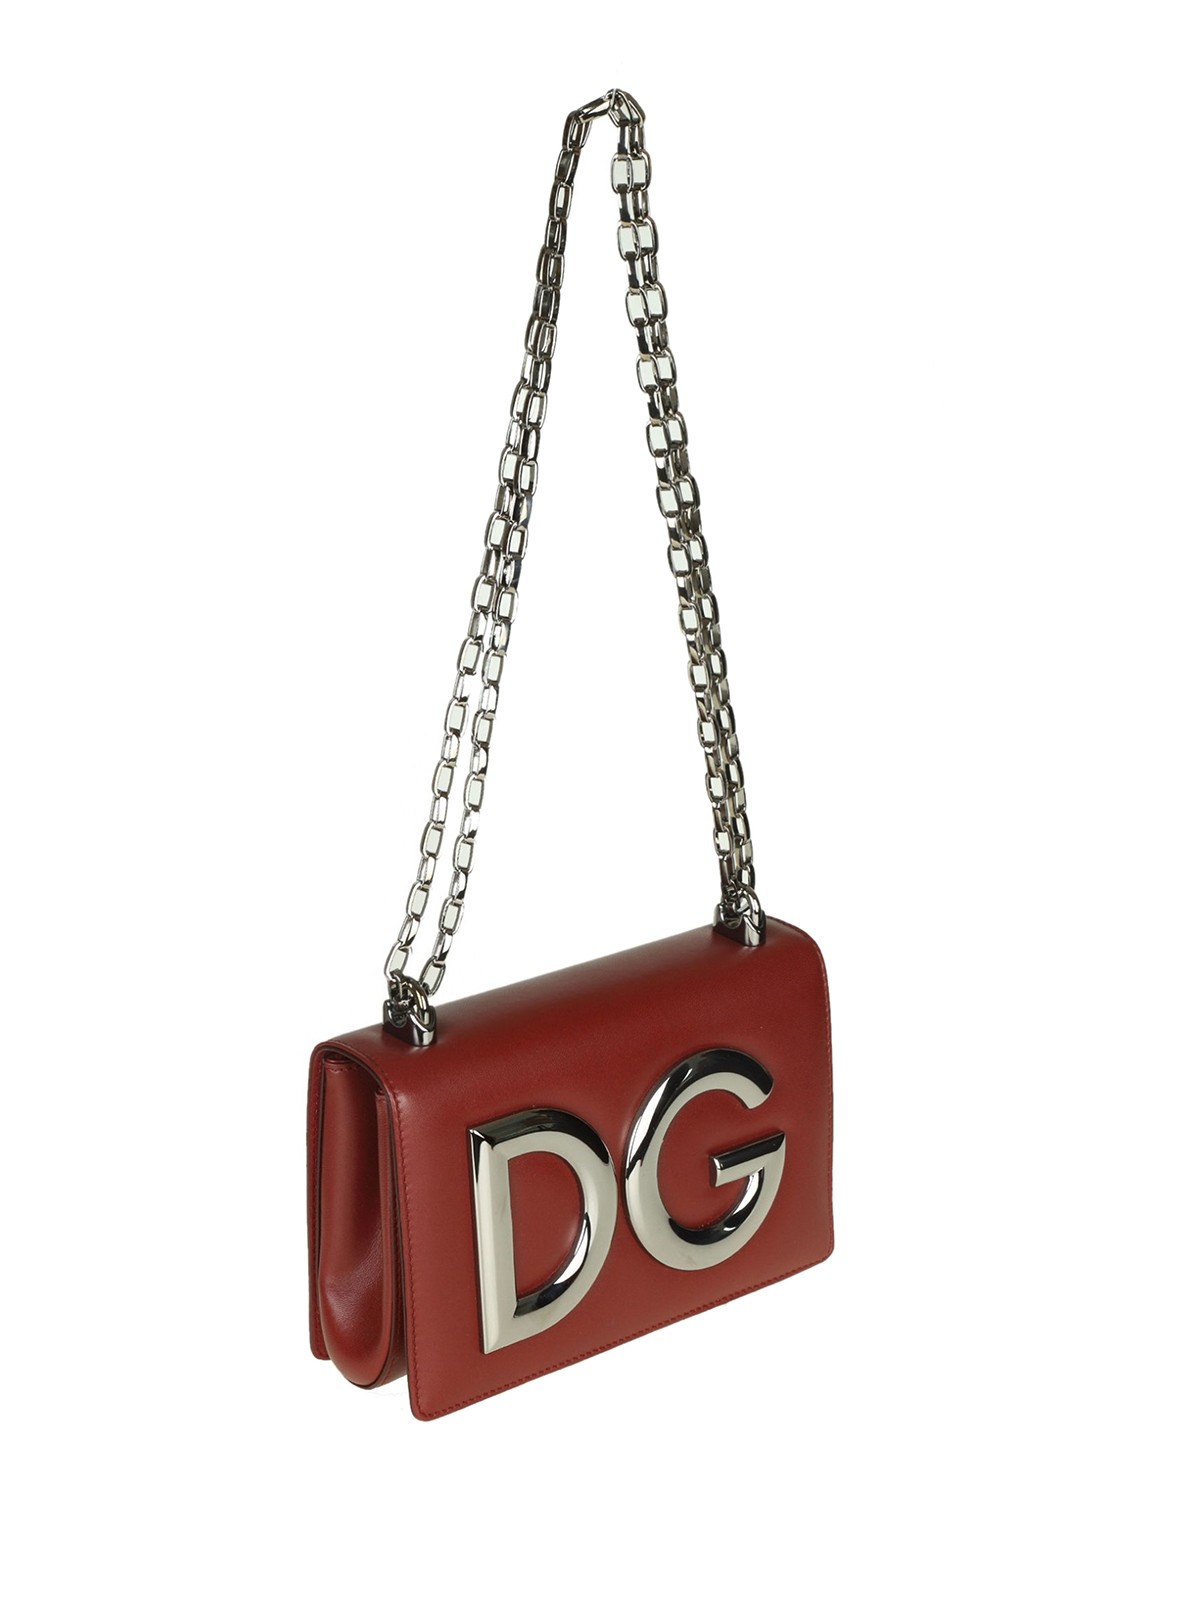 Gabbana - DG logo dark red leather bag 